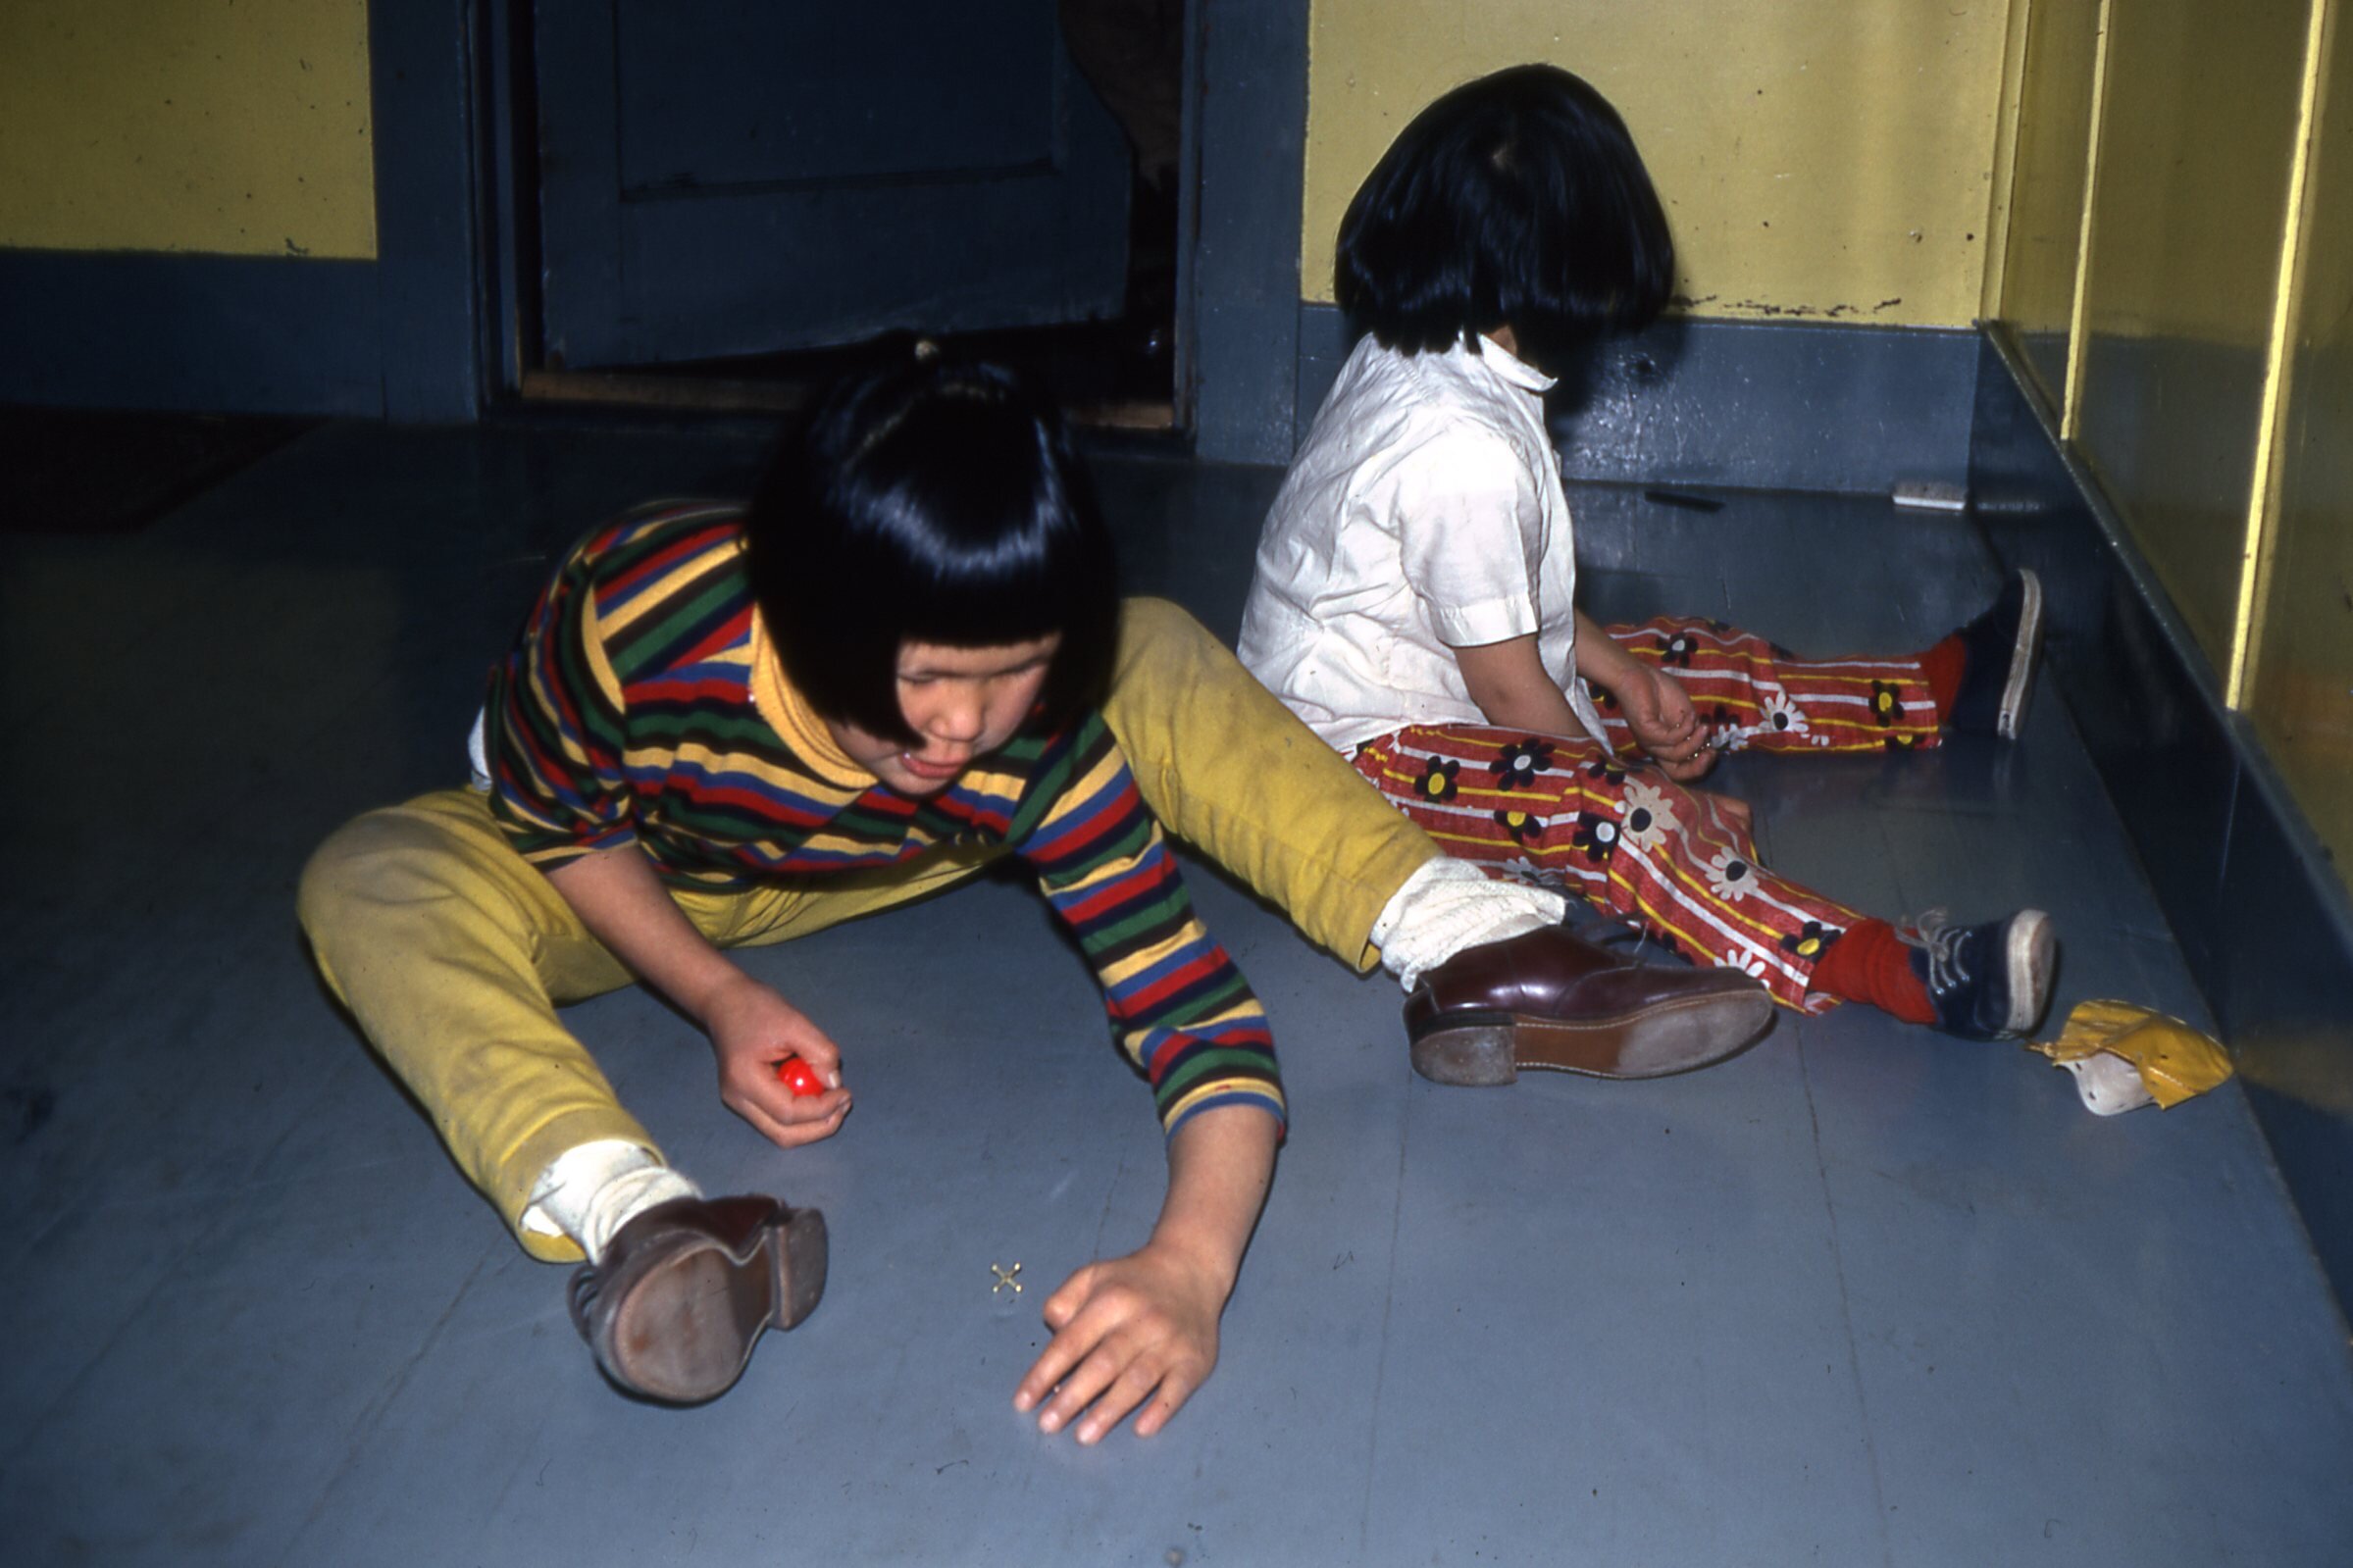 1970 Playing jacks.jpg